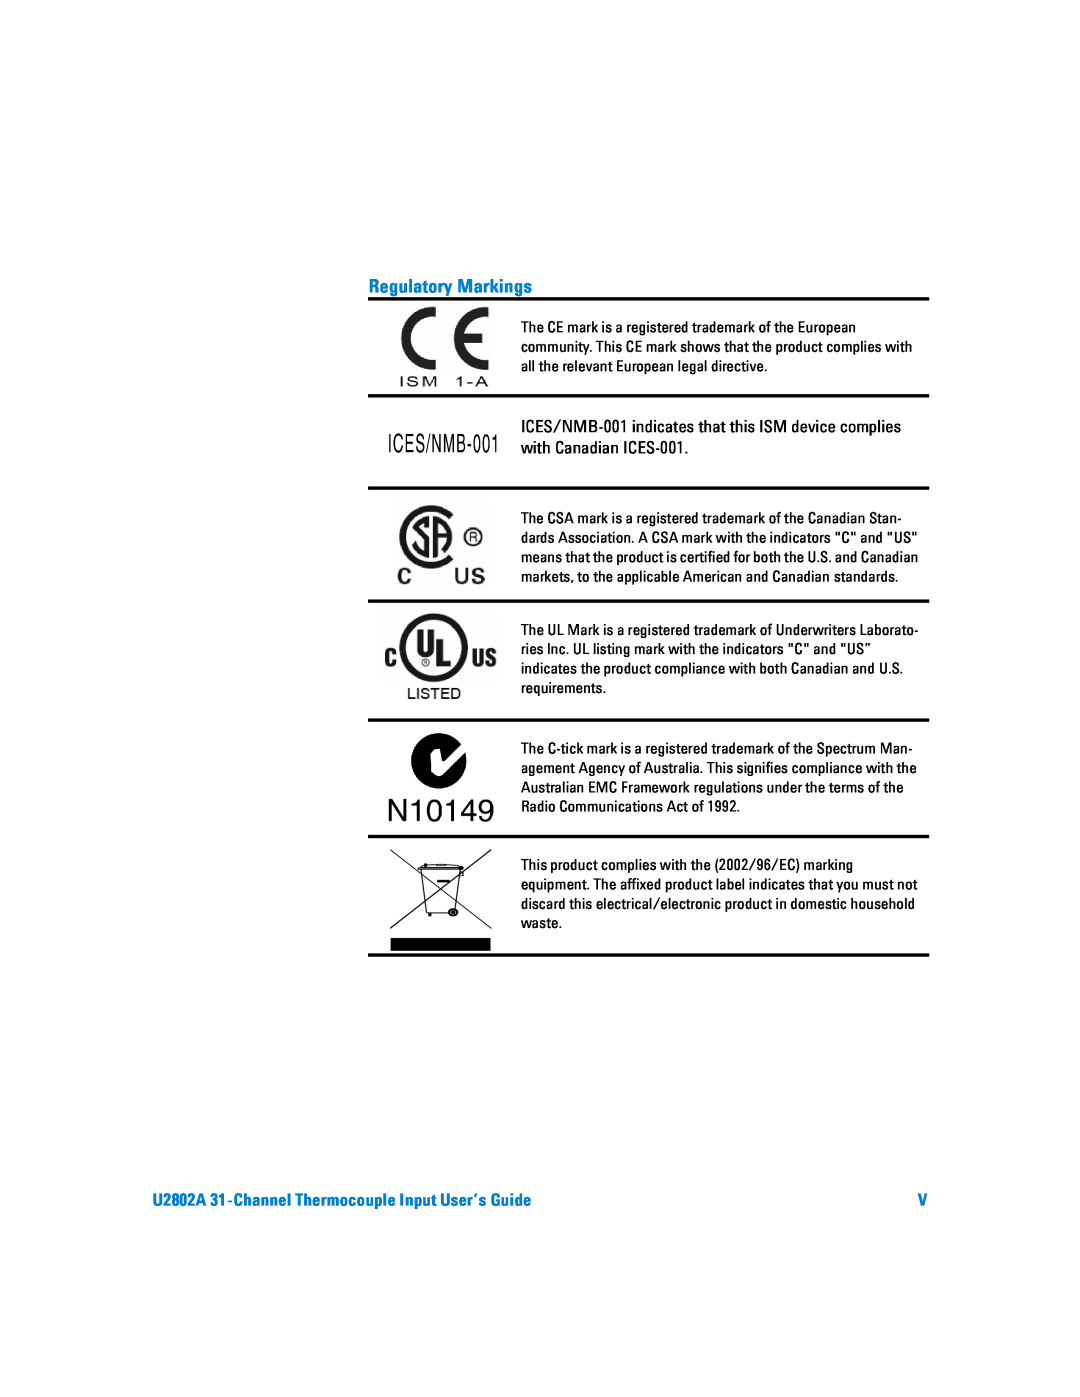 Agilent Technologies manual Regulatory Markings, U2802A 31-ChannelThermocouple Input User’s Guide 